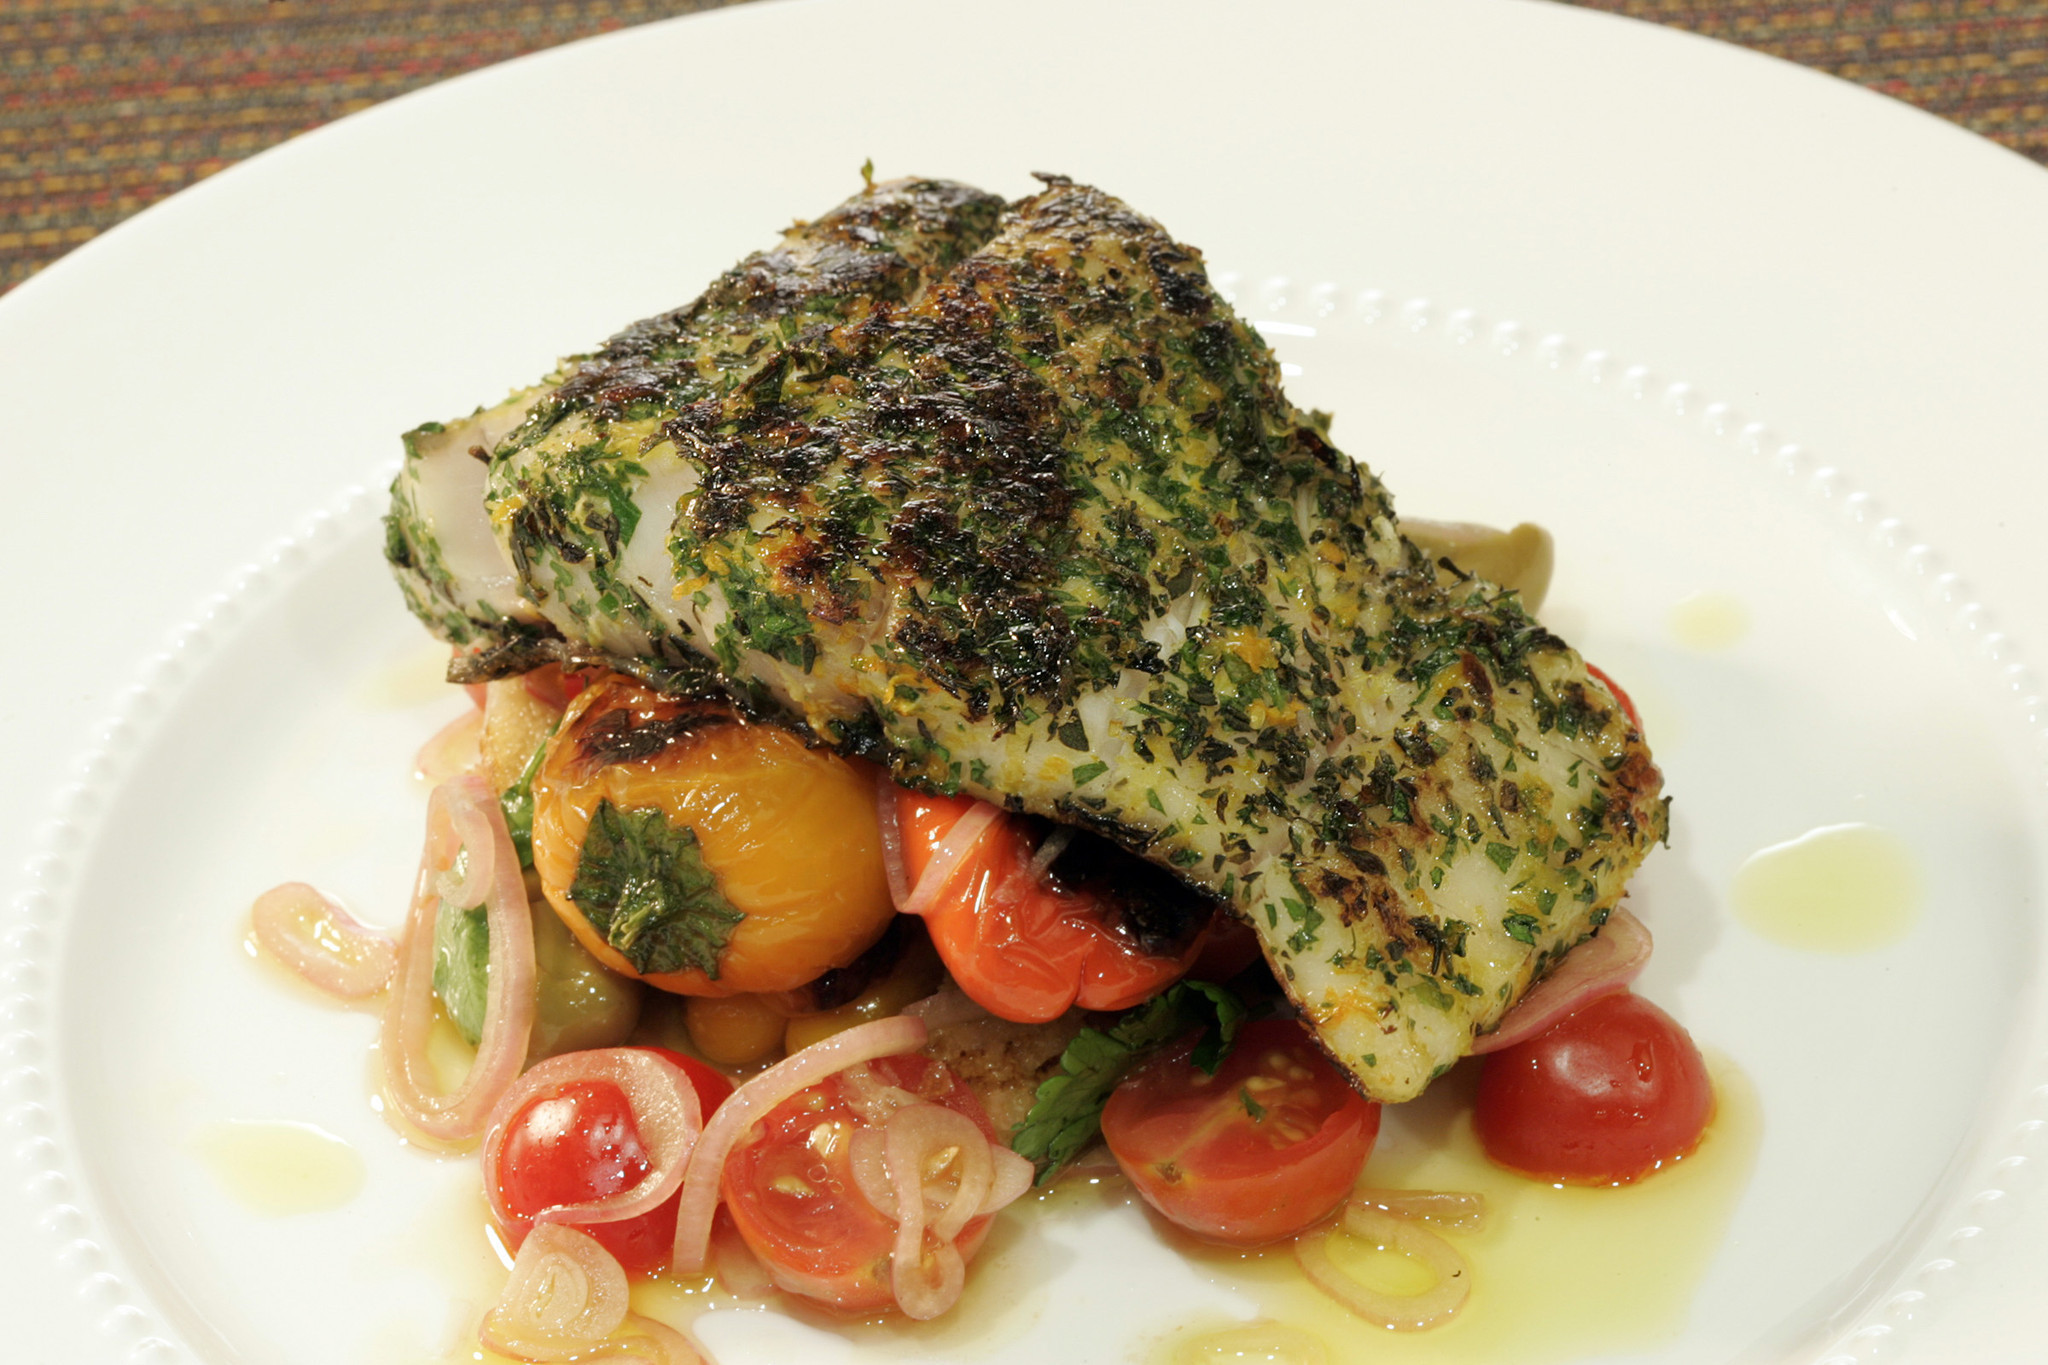 Great Fish Recipes Inspirational 11 Great Fish Recipe Ideas Under 400 Calories La Times